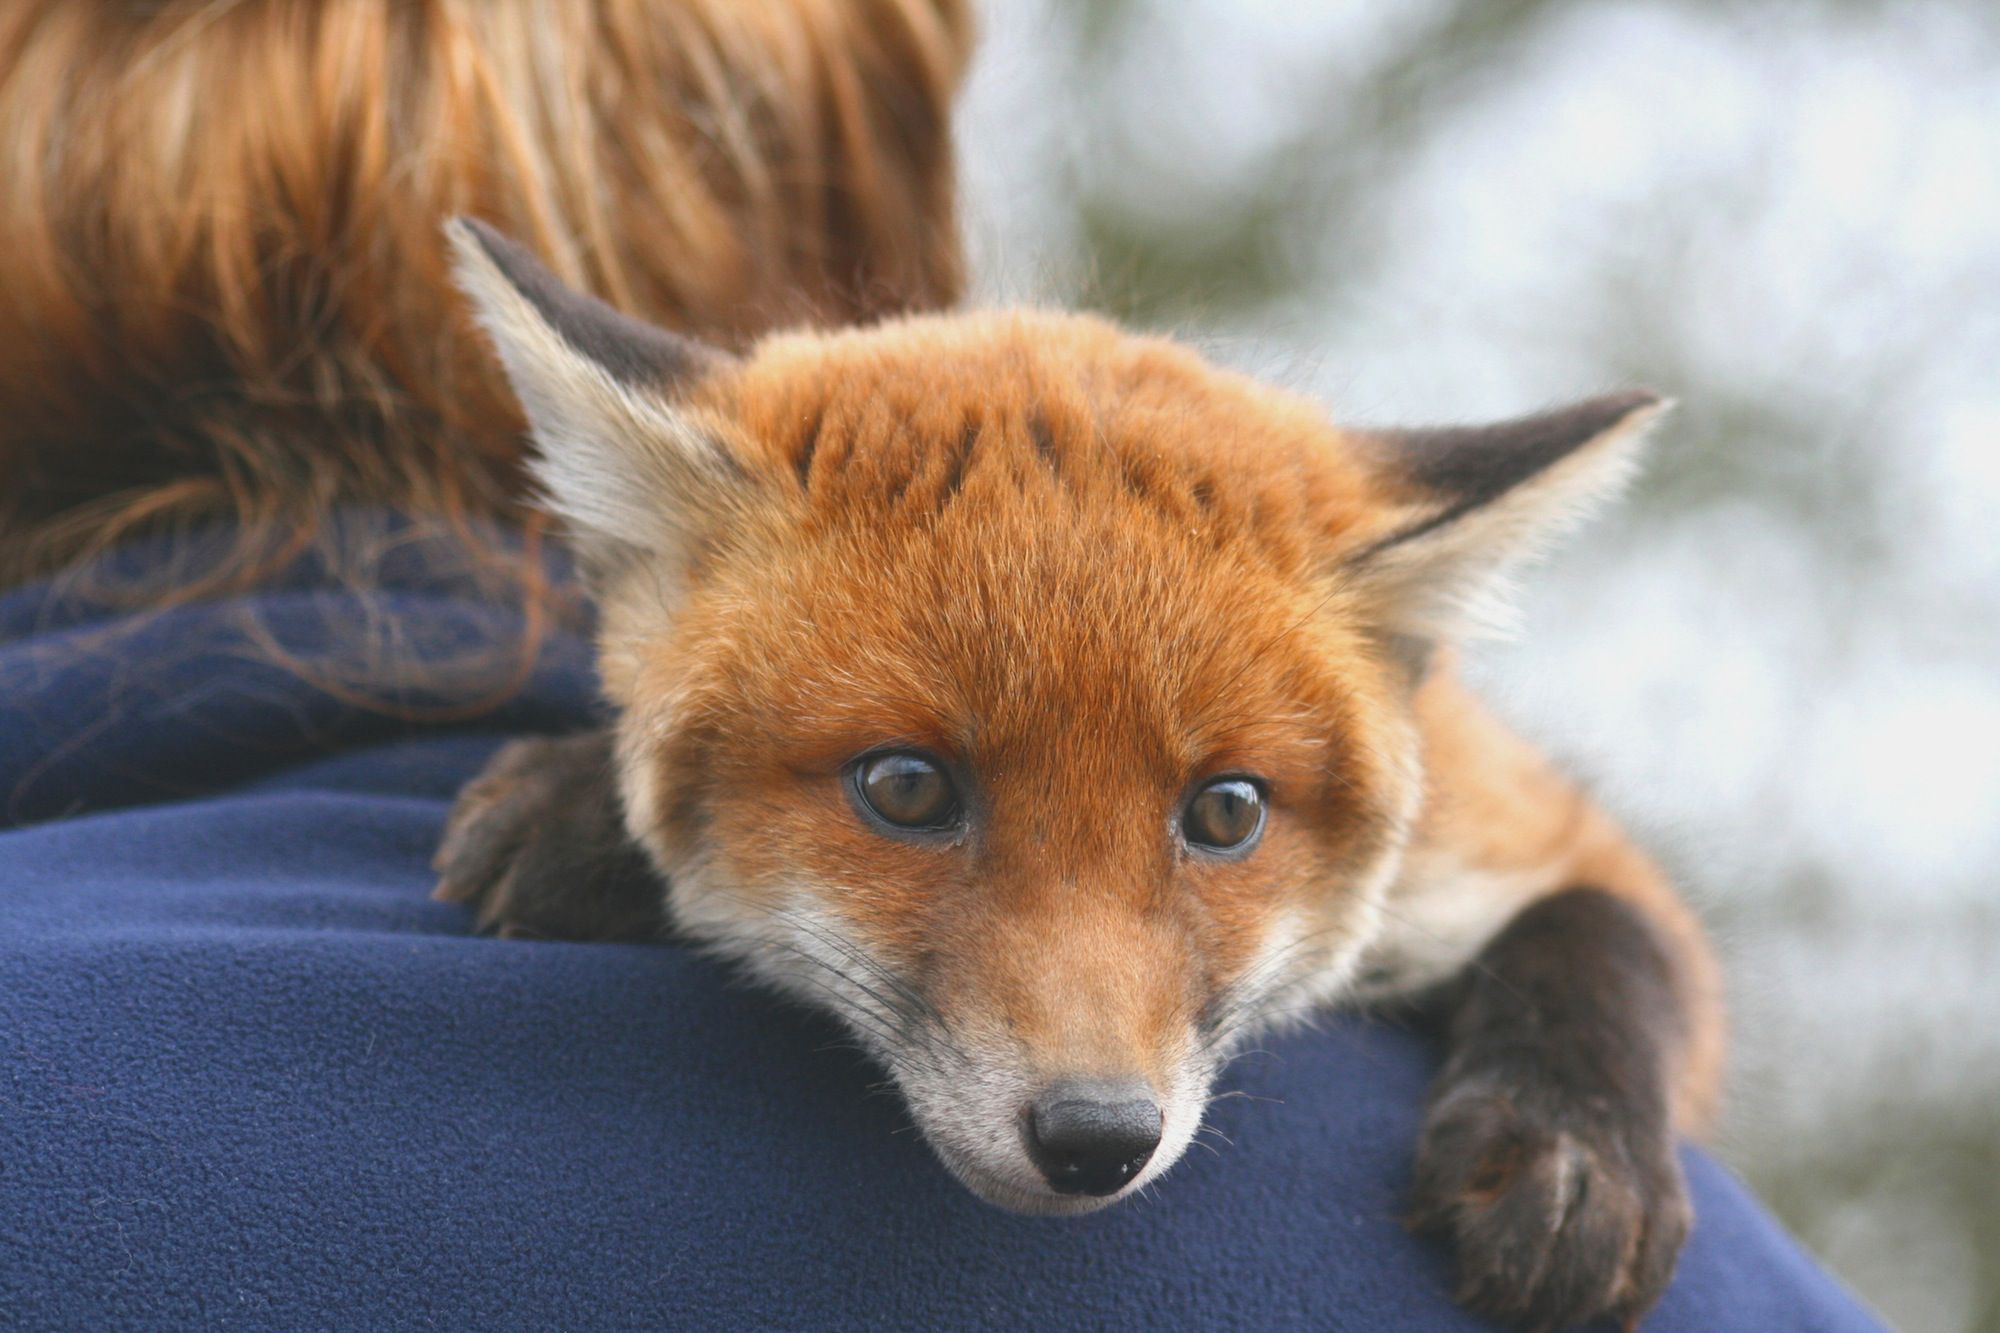 Pet Fox Food - Fox Diet - What Do Foxes Eat?